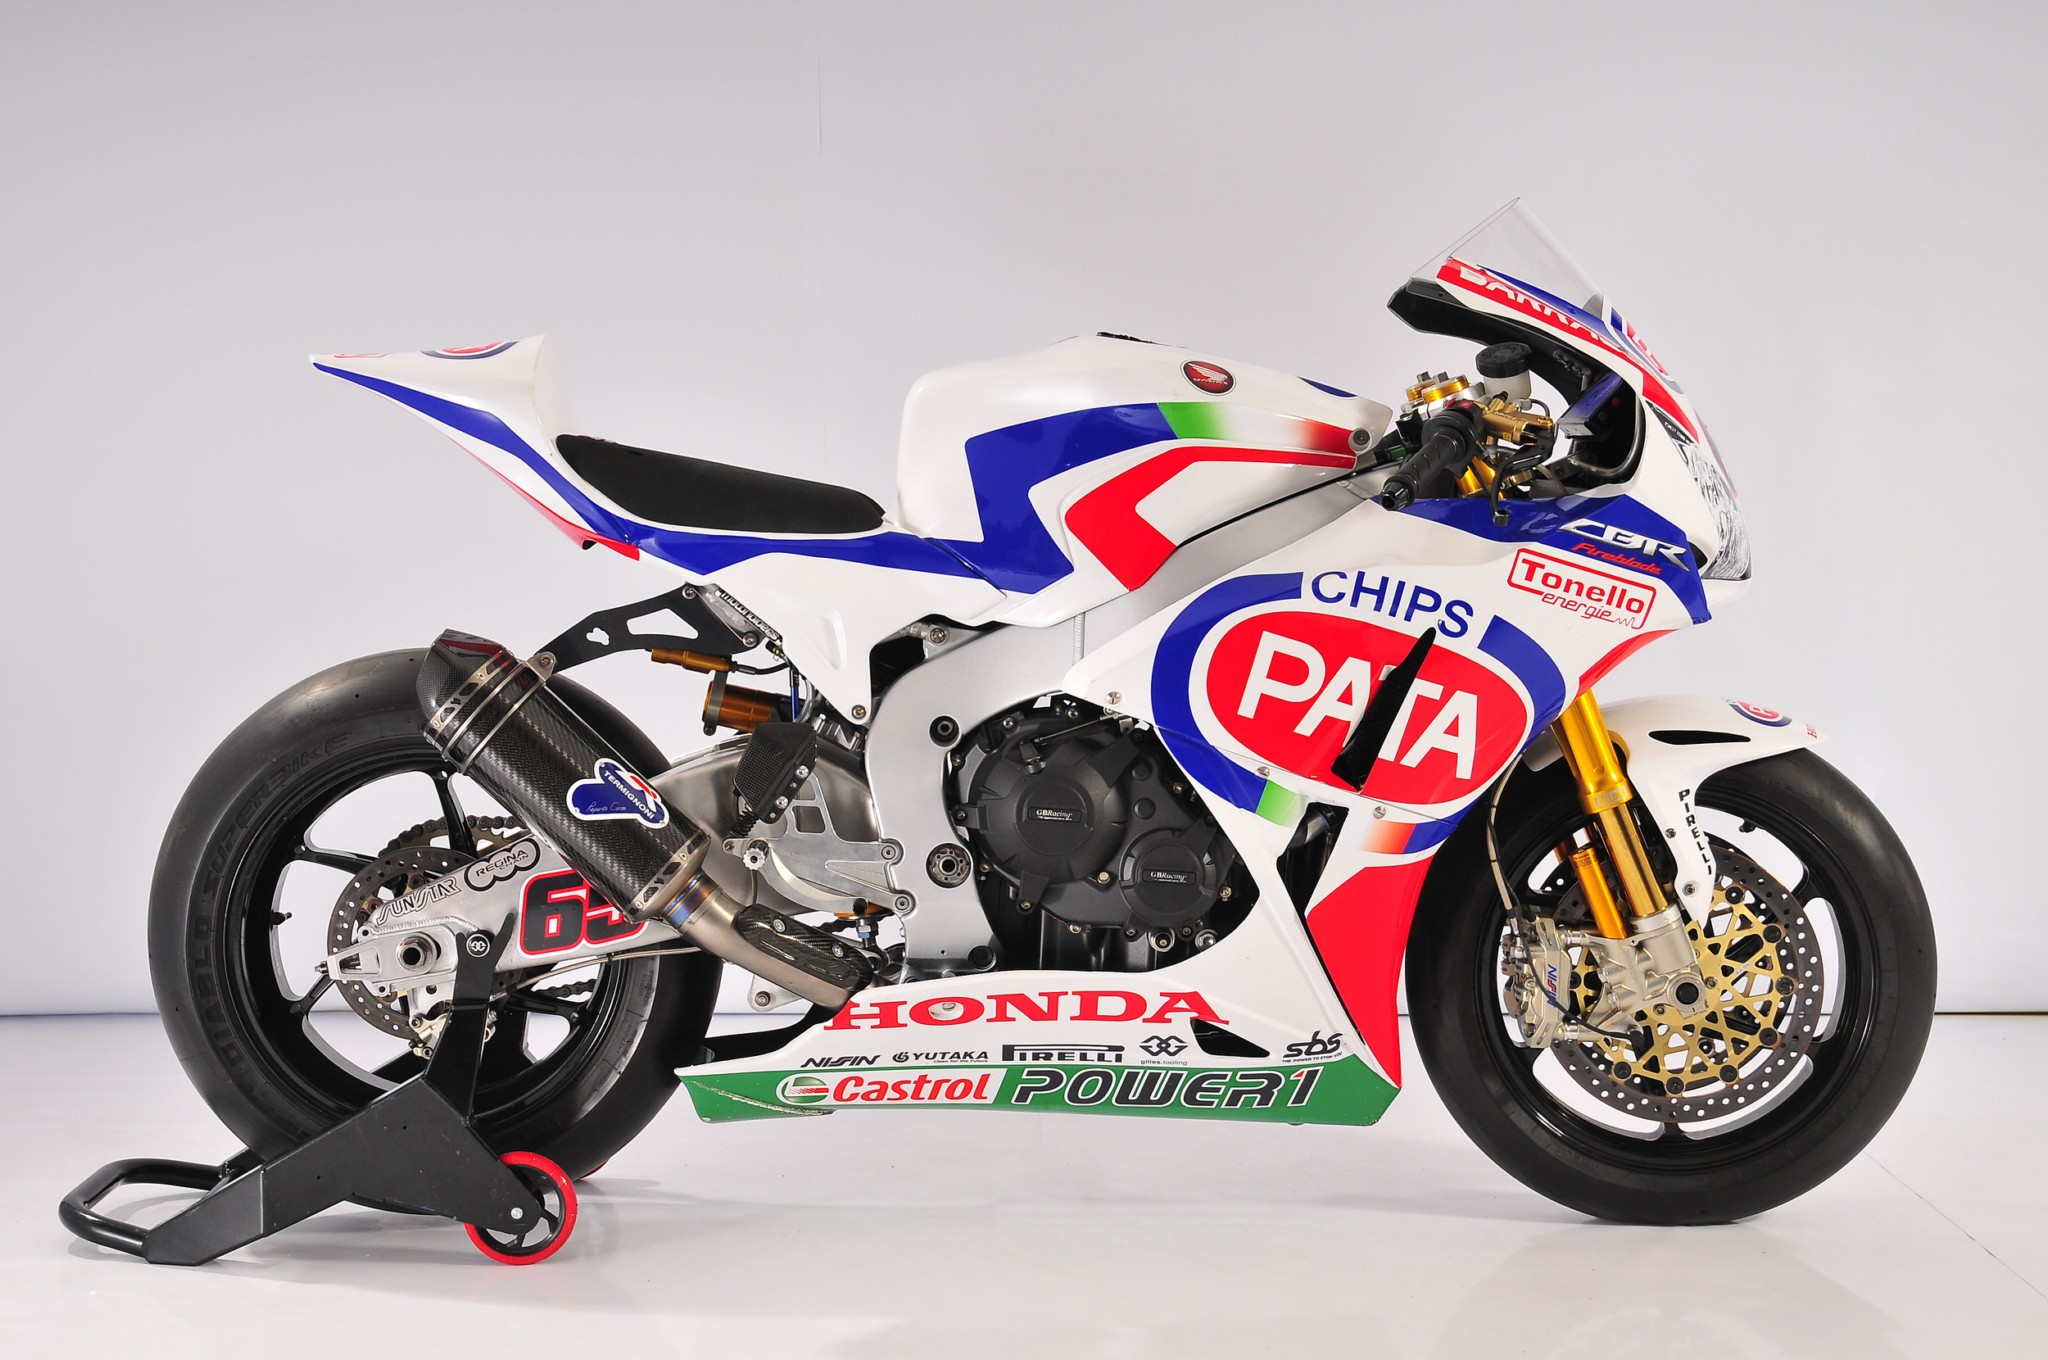 pata-honda-2014-world-superbike-and-supersport-team-introduced_10.jpg